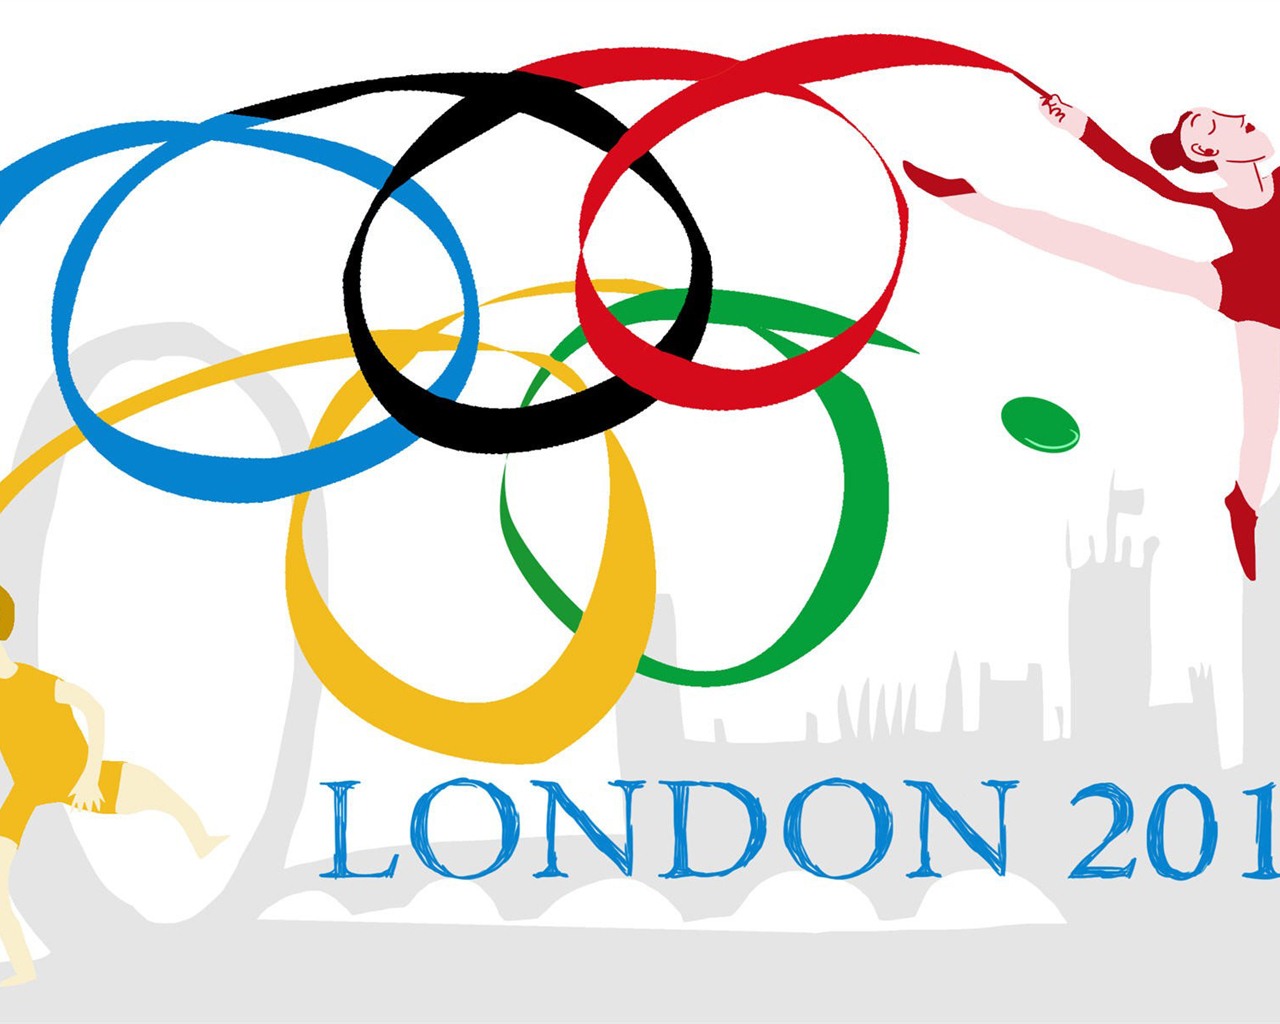 London 2012 Olympics theme wallpapers (2) #16 - 1280x1024